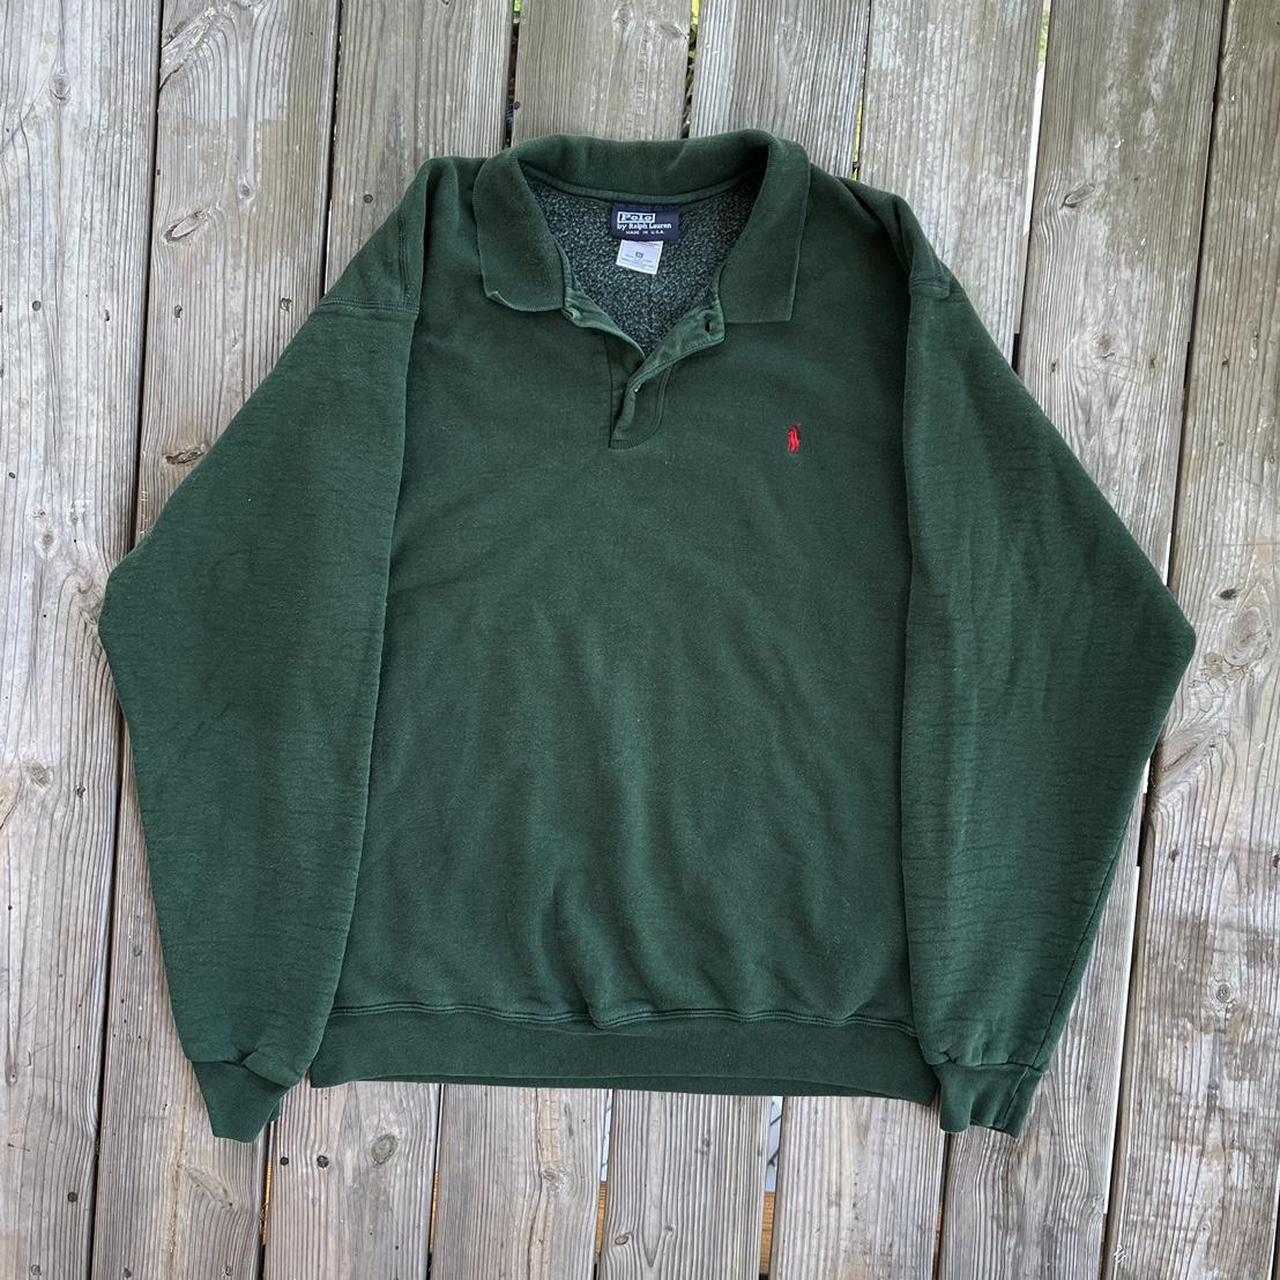 vintage green polo sweatshirt 🚨 size XL for... - Depop